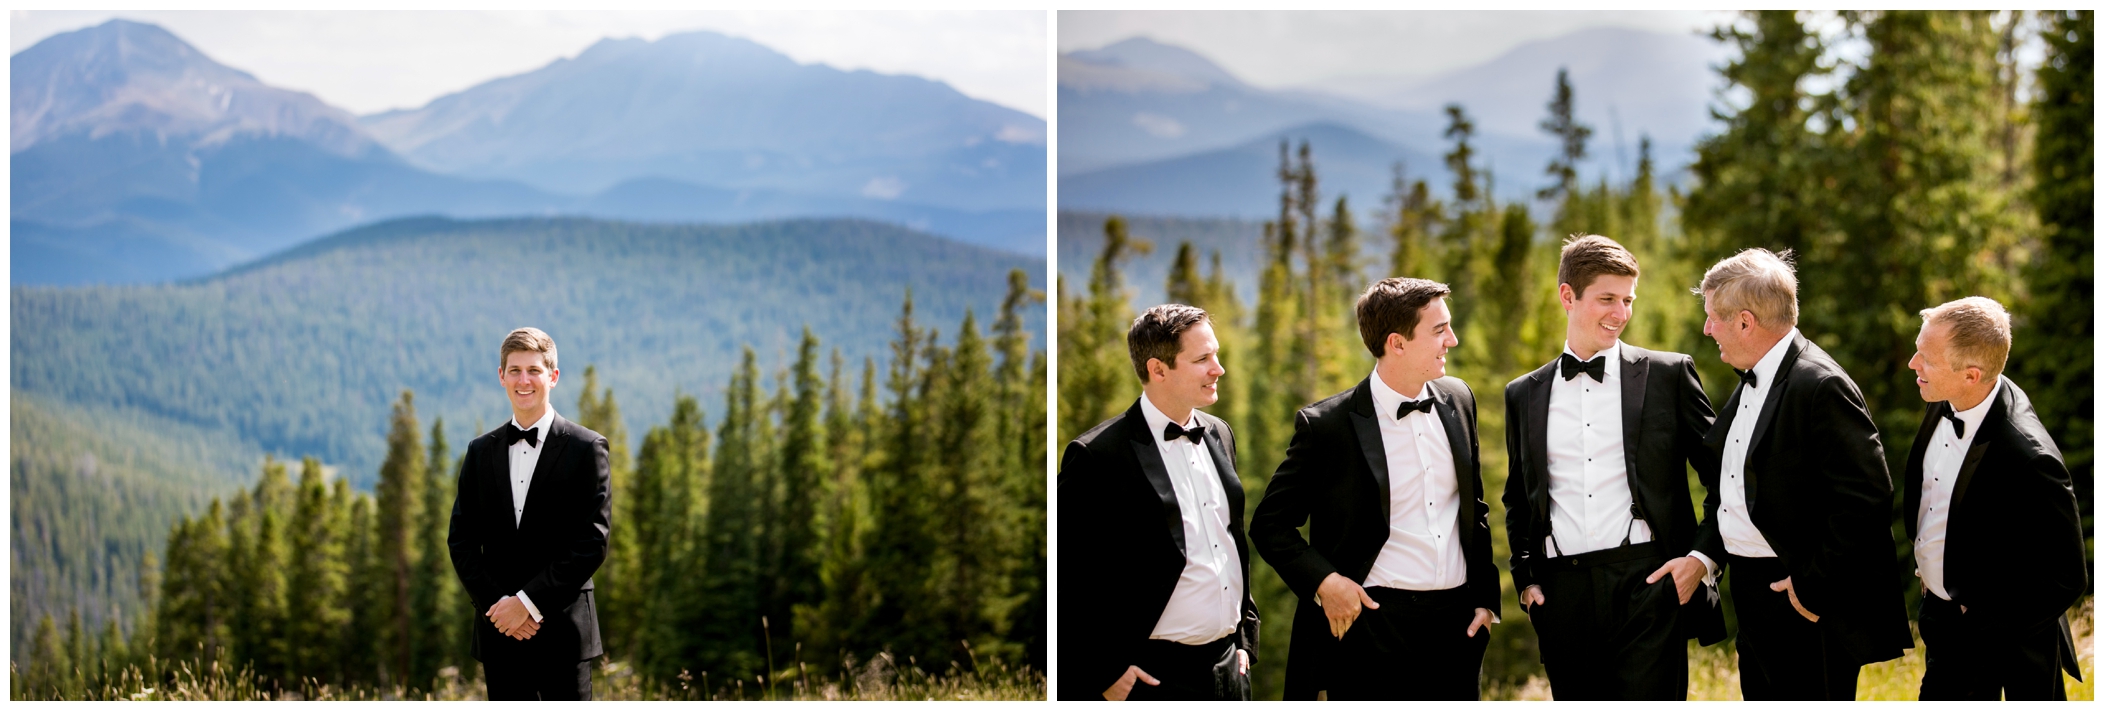 groom with mountain background at Keystone Colorado black tie wedding 